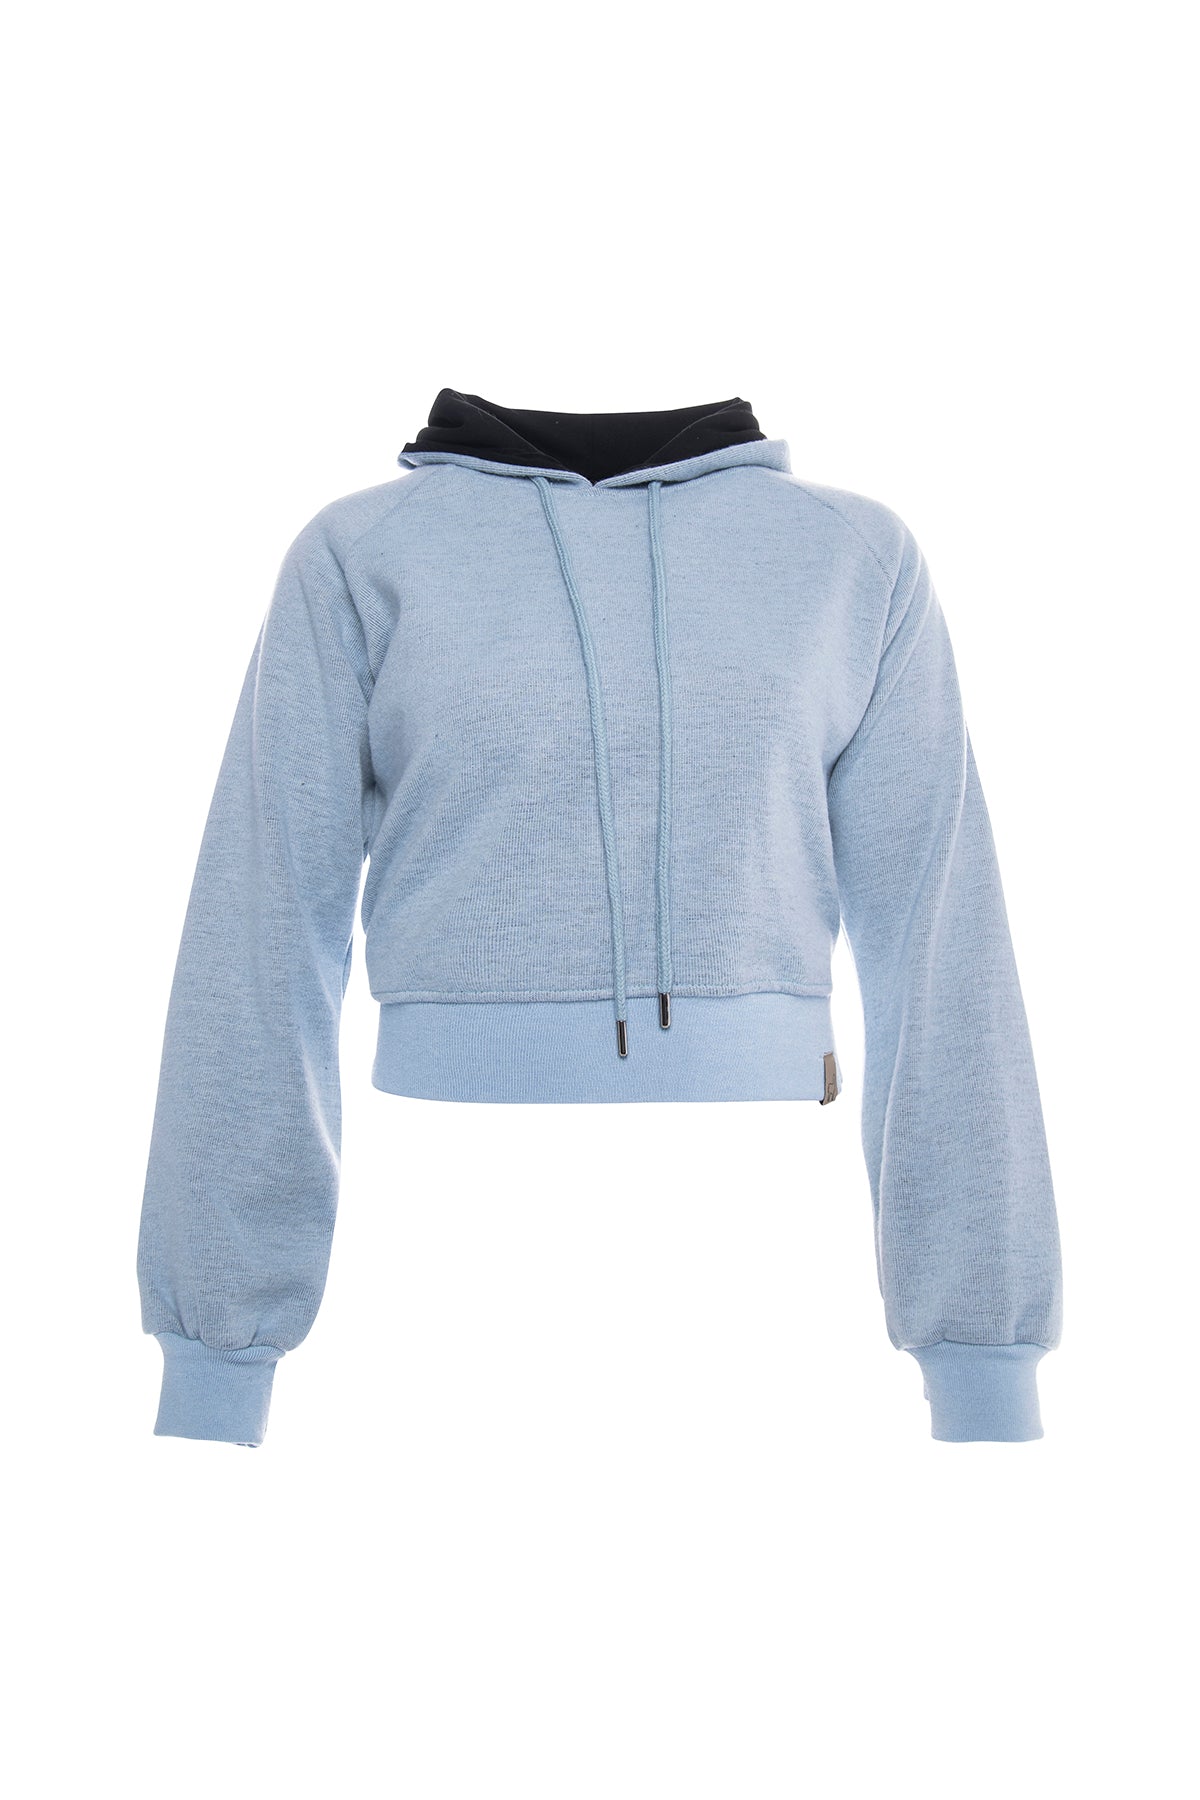 Comfortable short hoodie for women in sky blue.